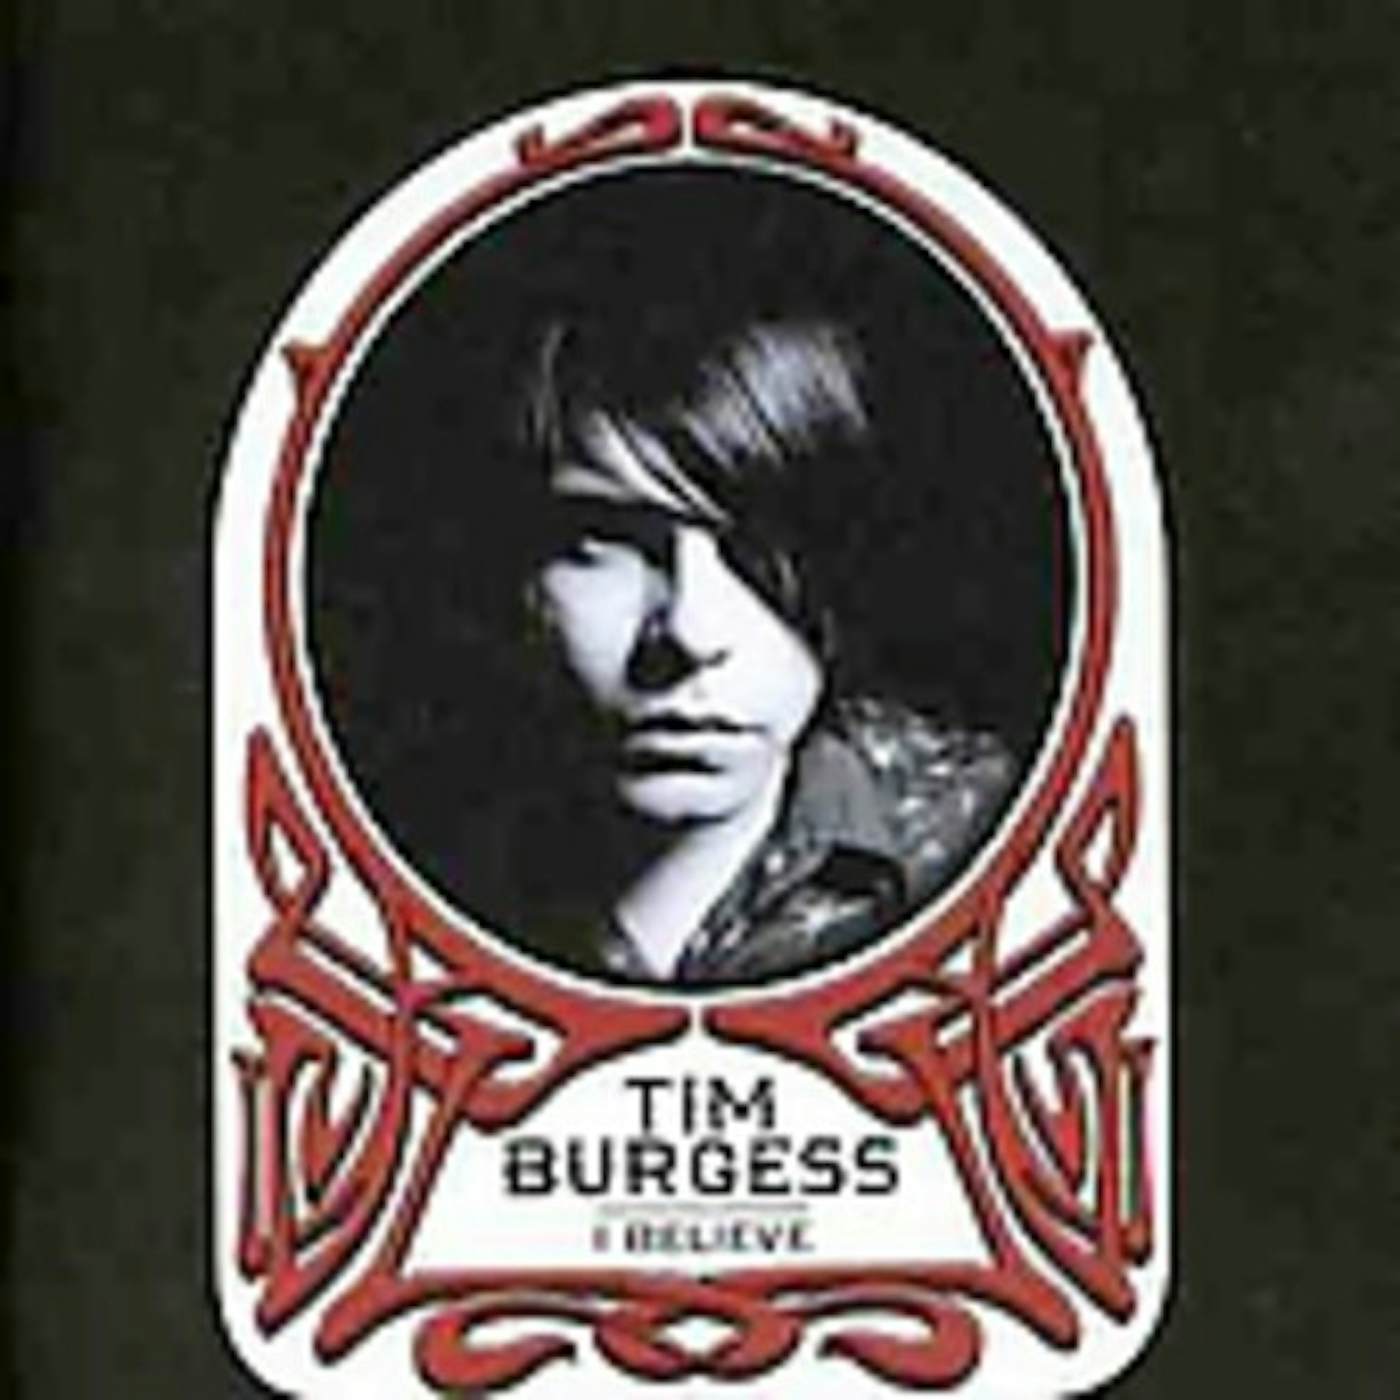 Tim Burgess I BELIEVE CD